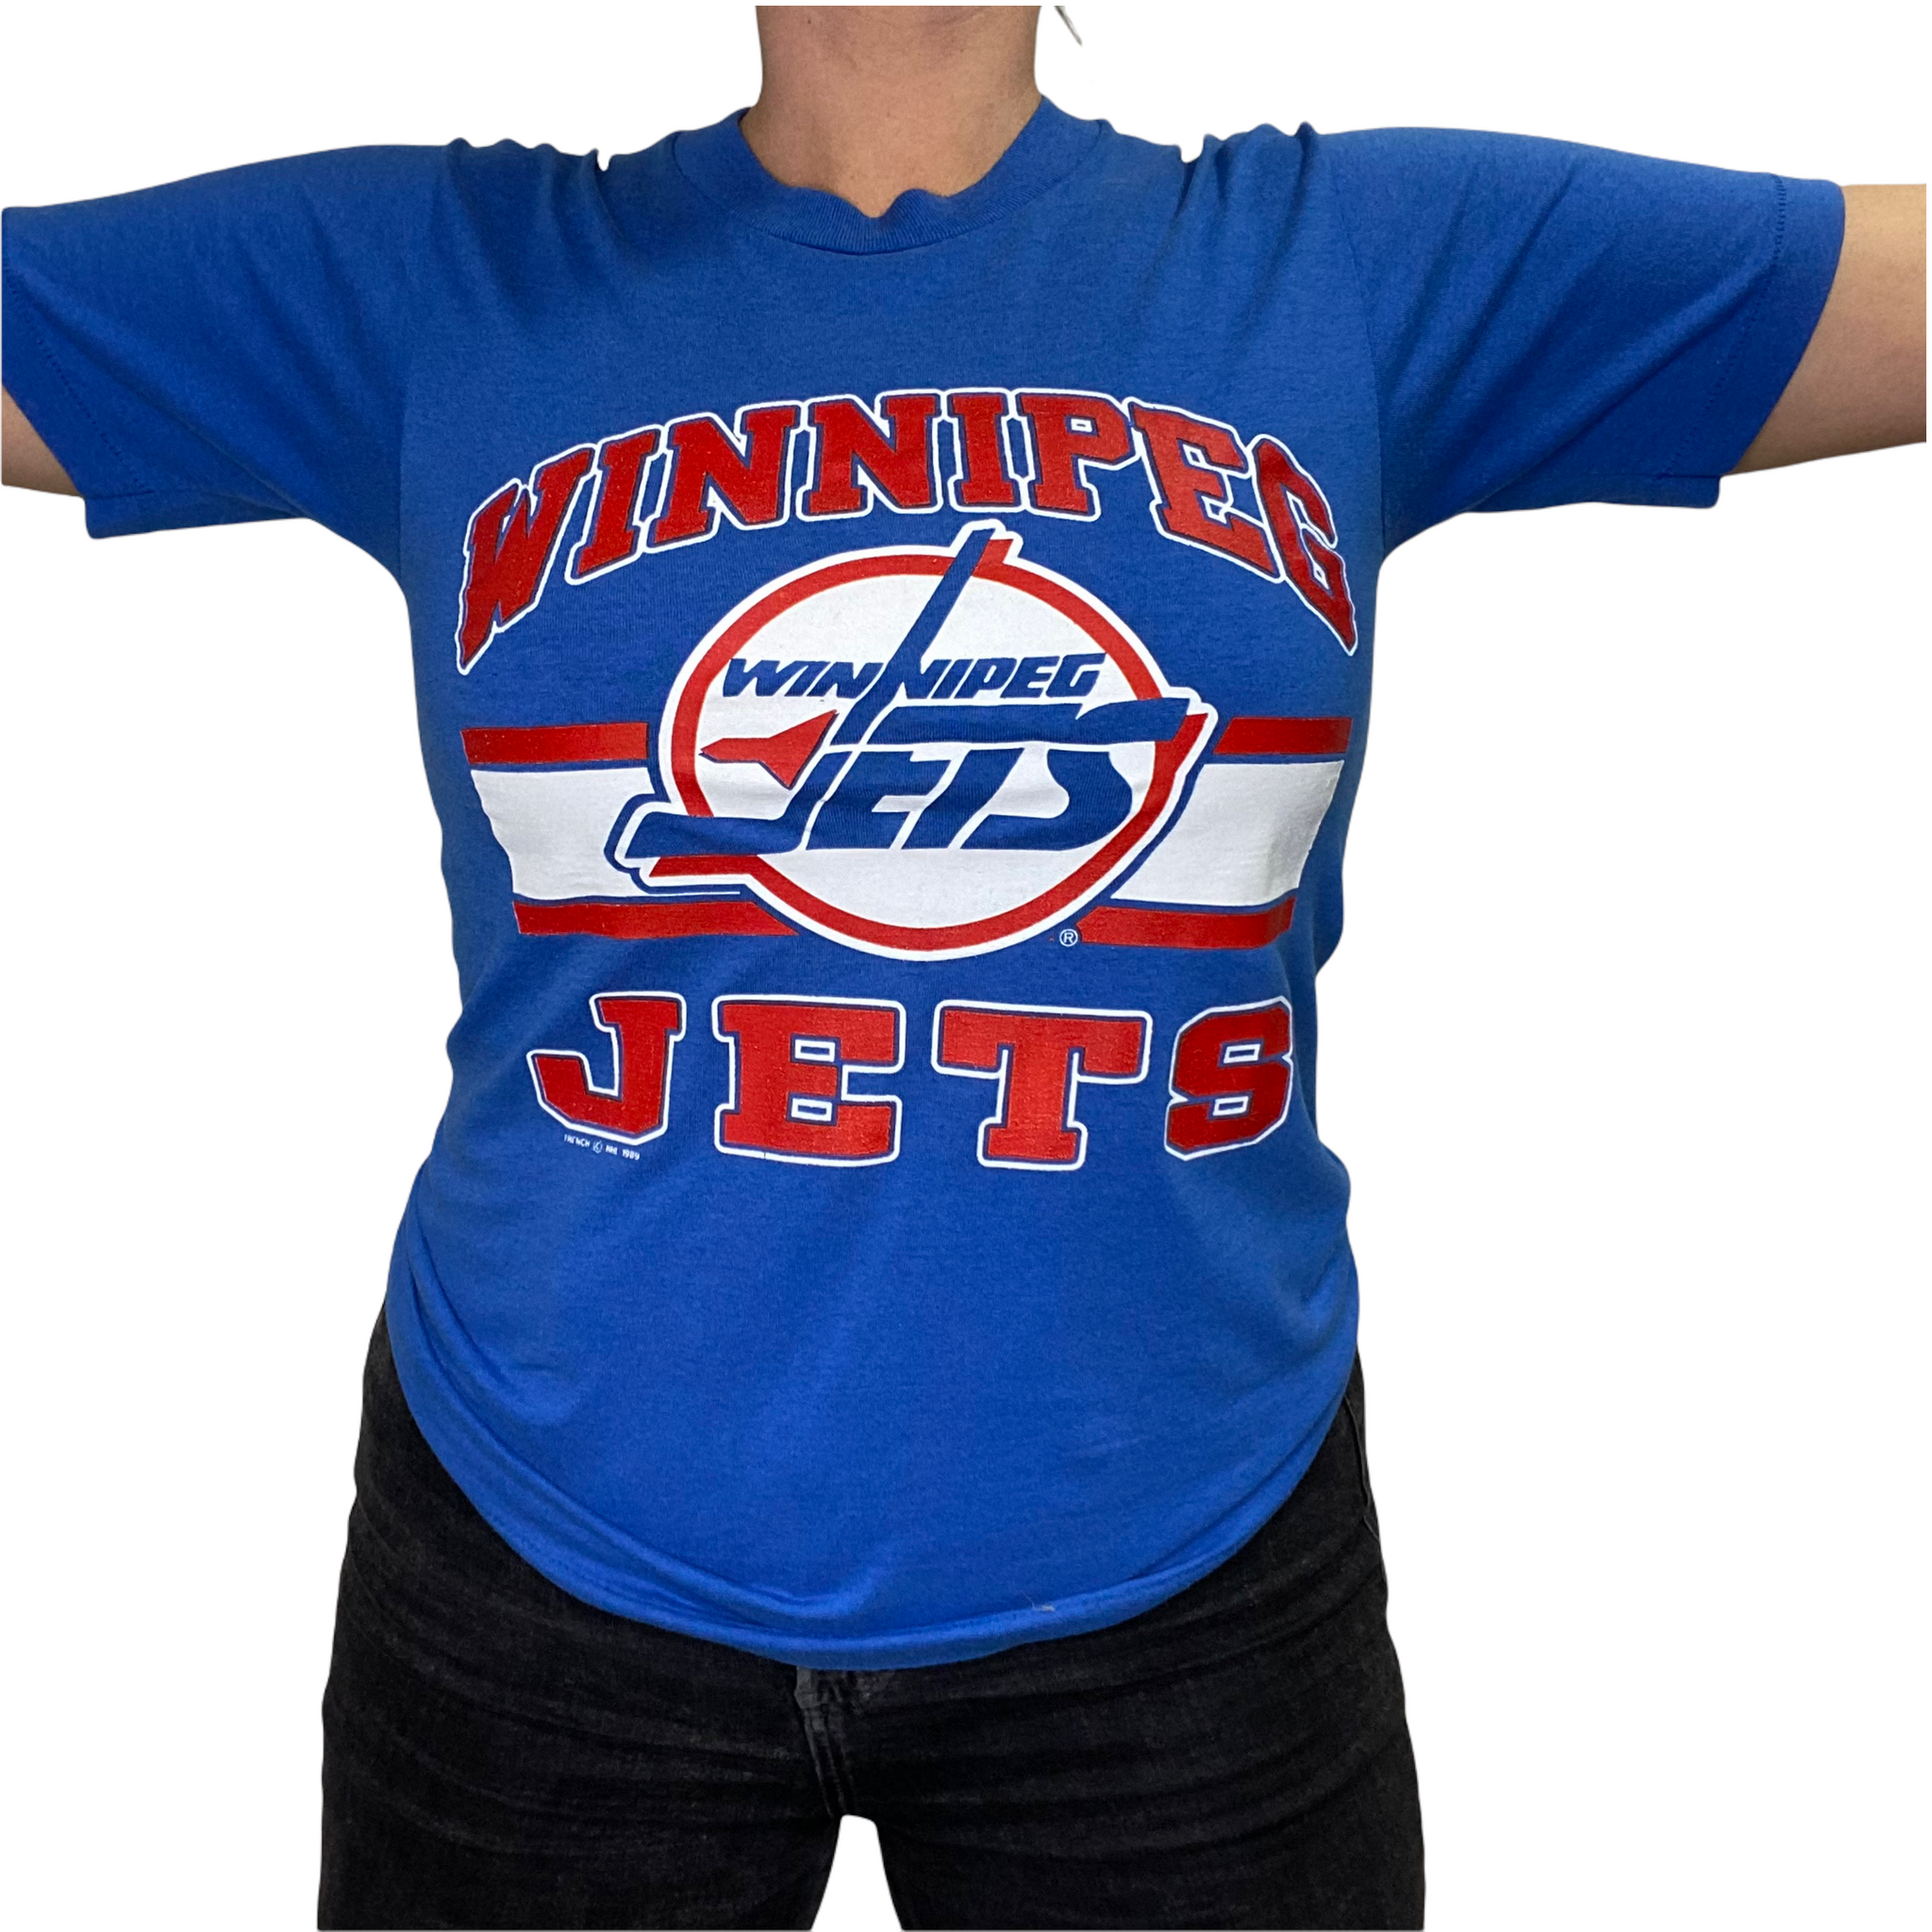 Winnipeg Jets baby jersey